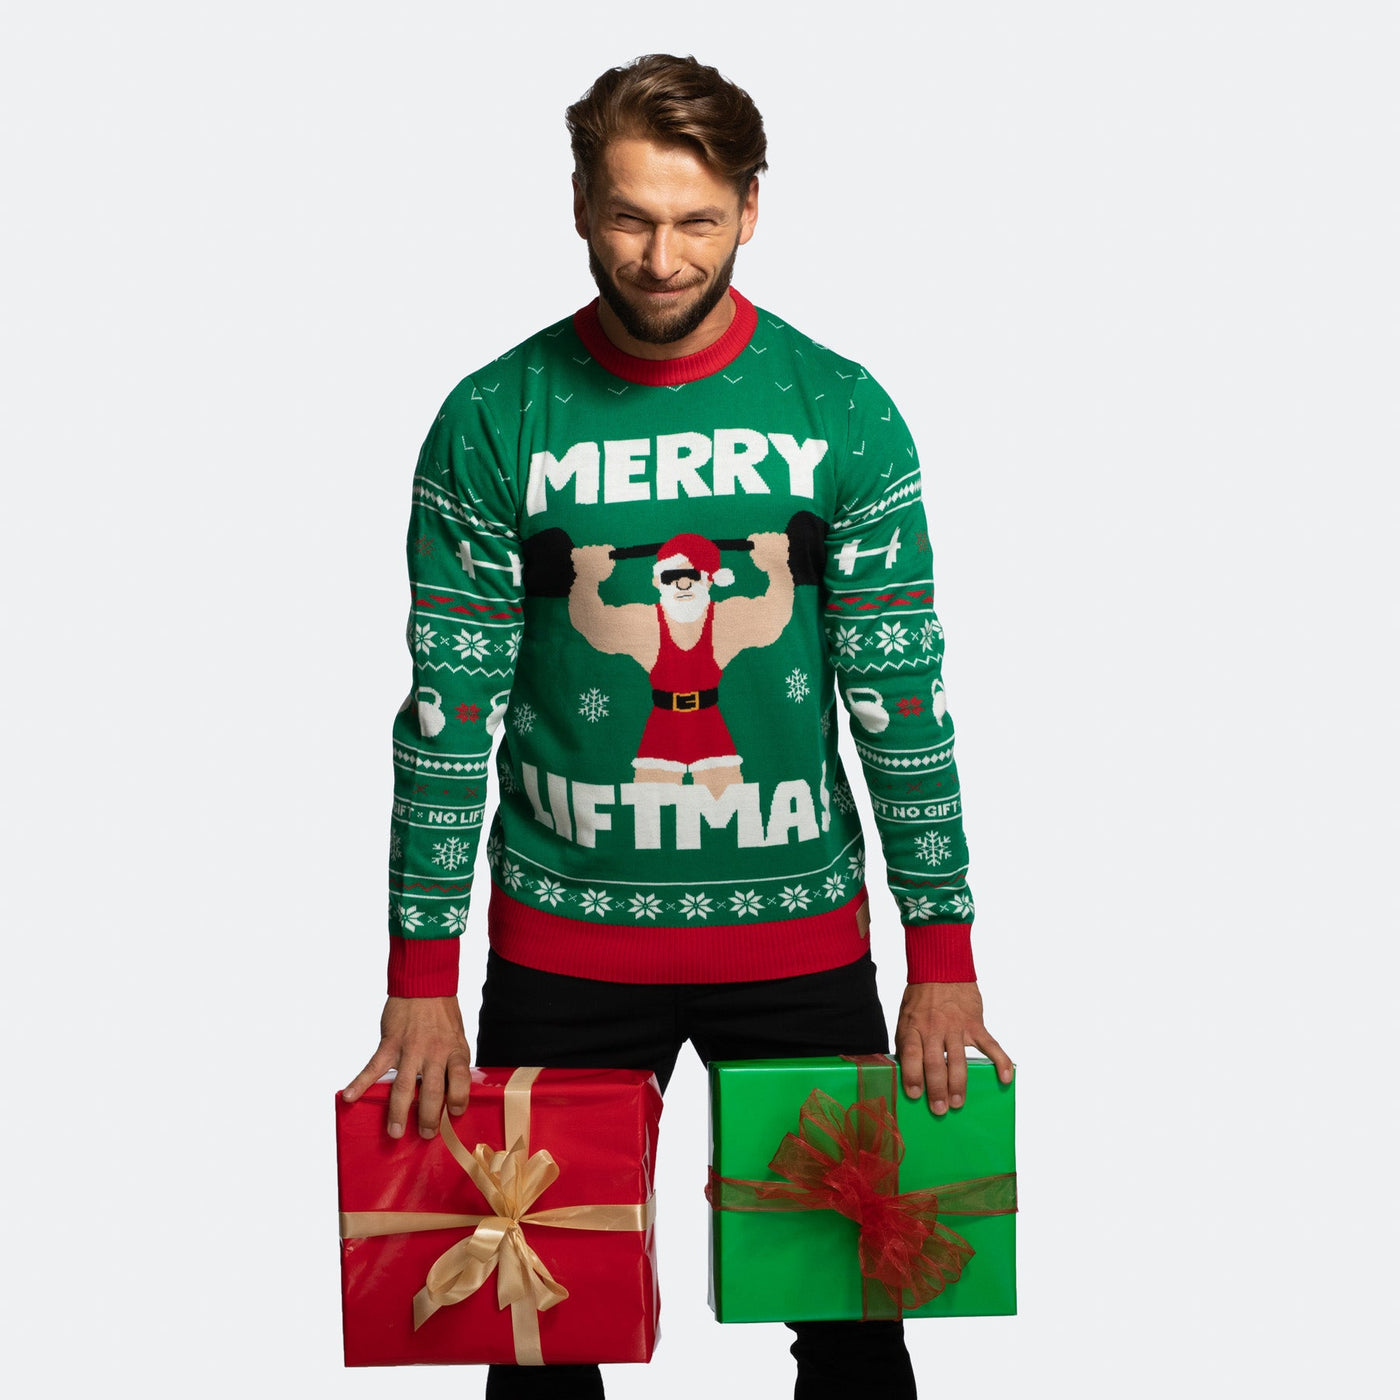 Men's Merry Liftmas Christmas Sweater